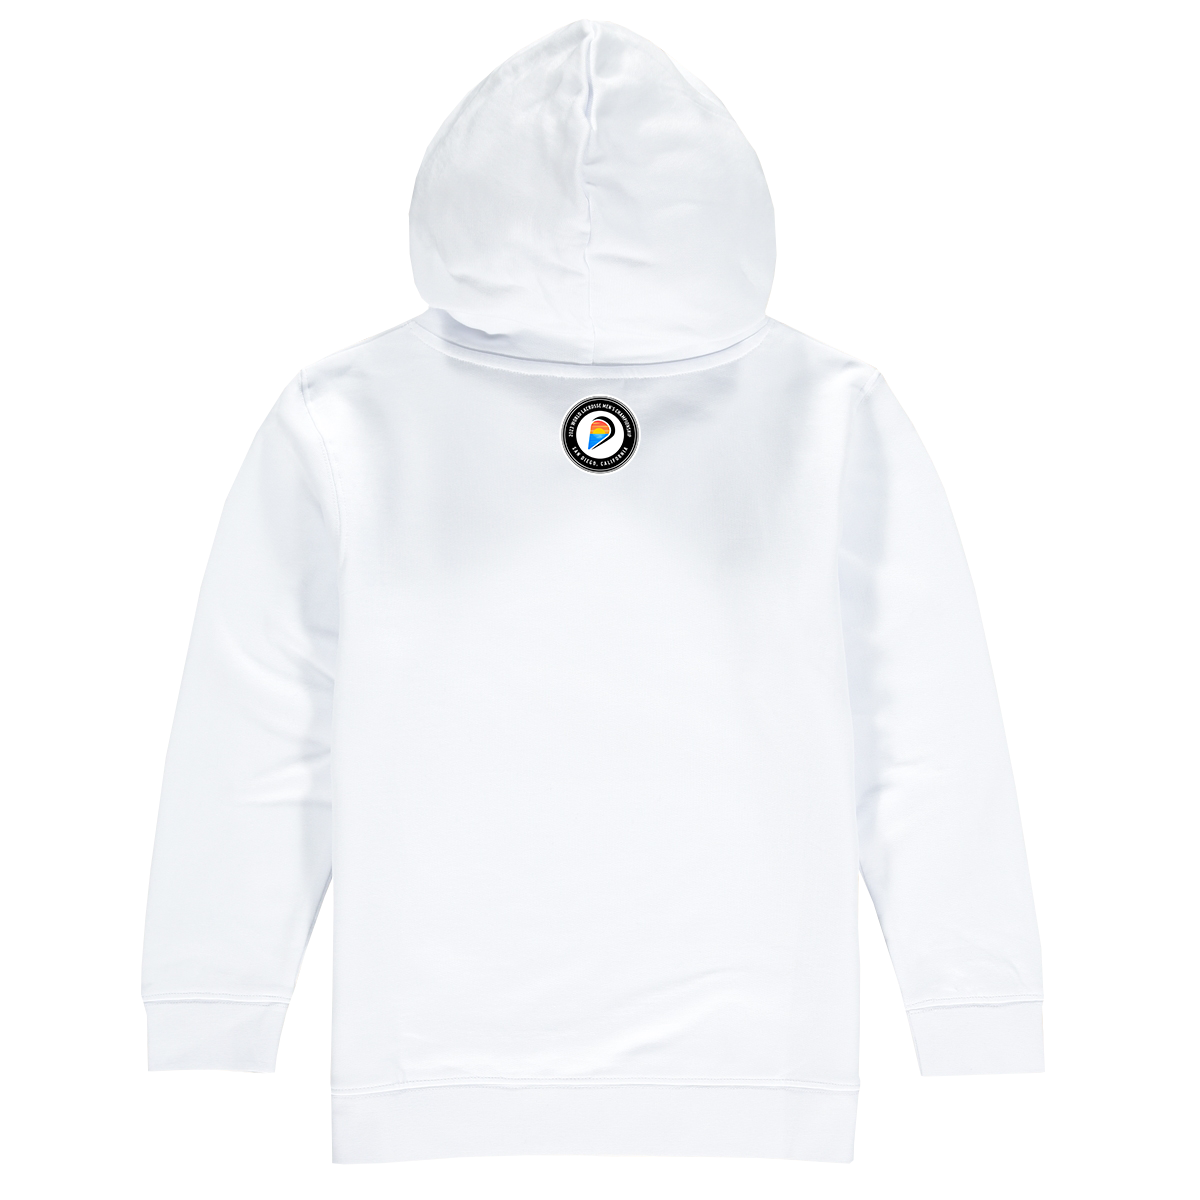 Australia Premium Unisex Hoodie Sweatshirt White